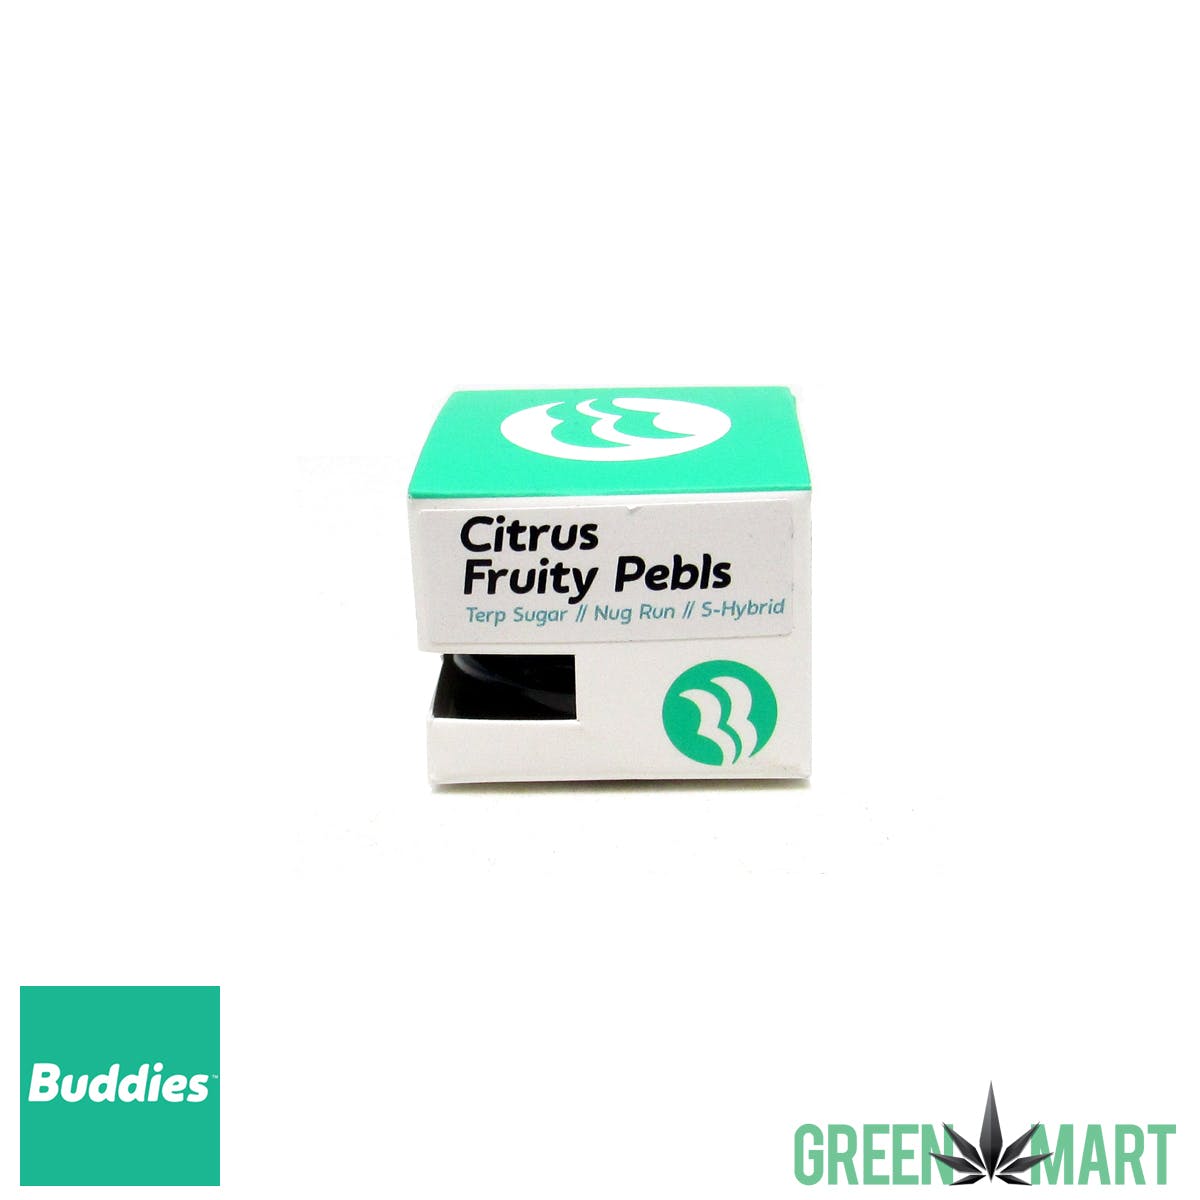 Buddies 1g Terp Sugar Dab - Citrus Fruity Pebls